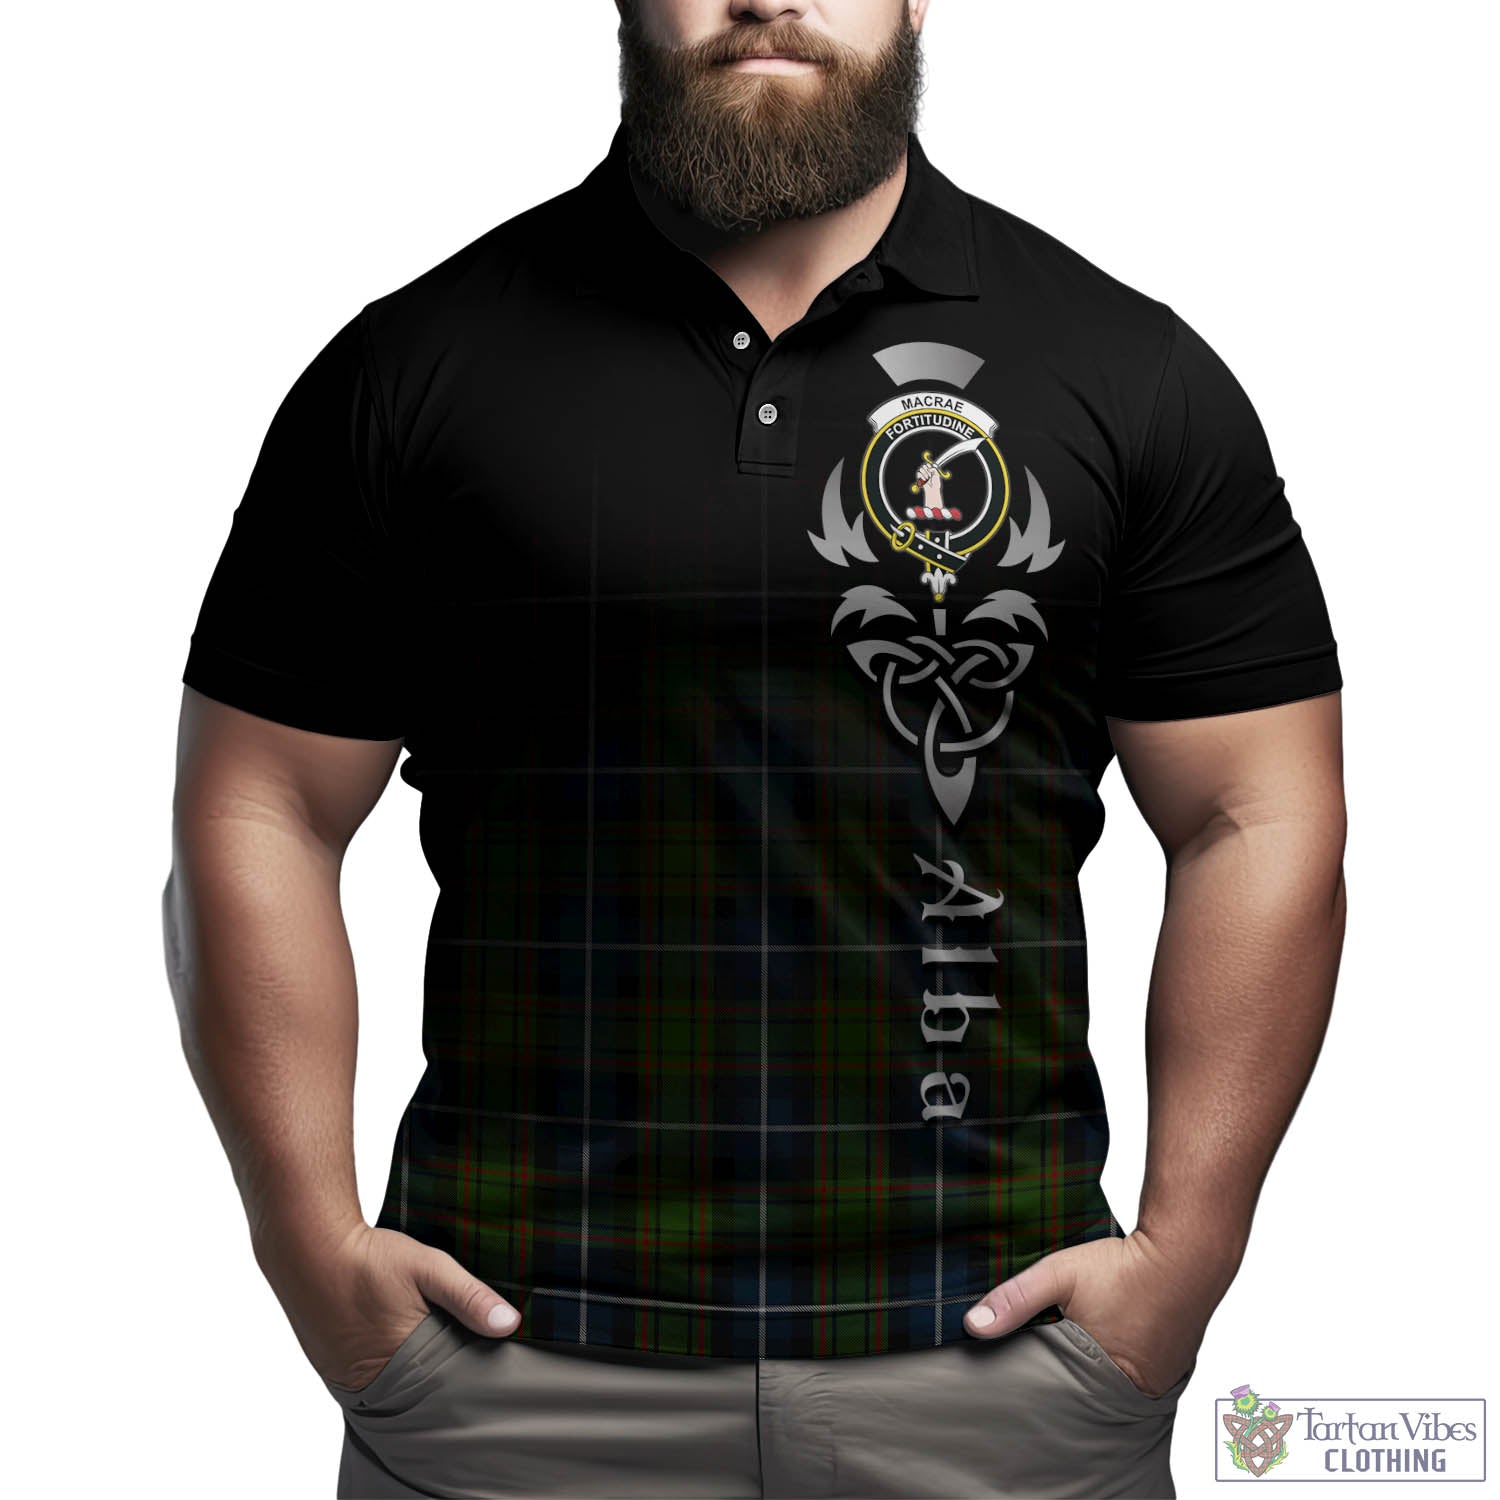 Tartan Vibes Clothing MacRae Hunting Tartan Polo Shirt Featuring Alba Gu Brath Family Crest Celtic Inspired